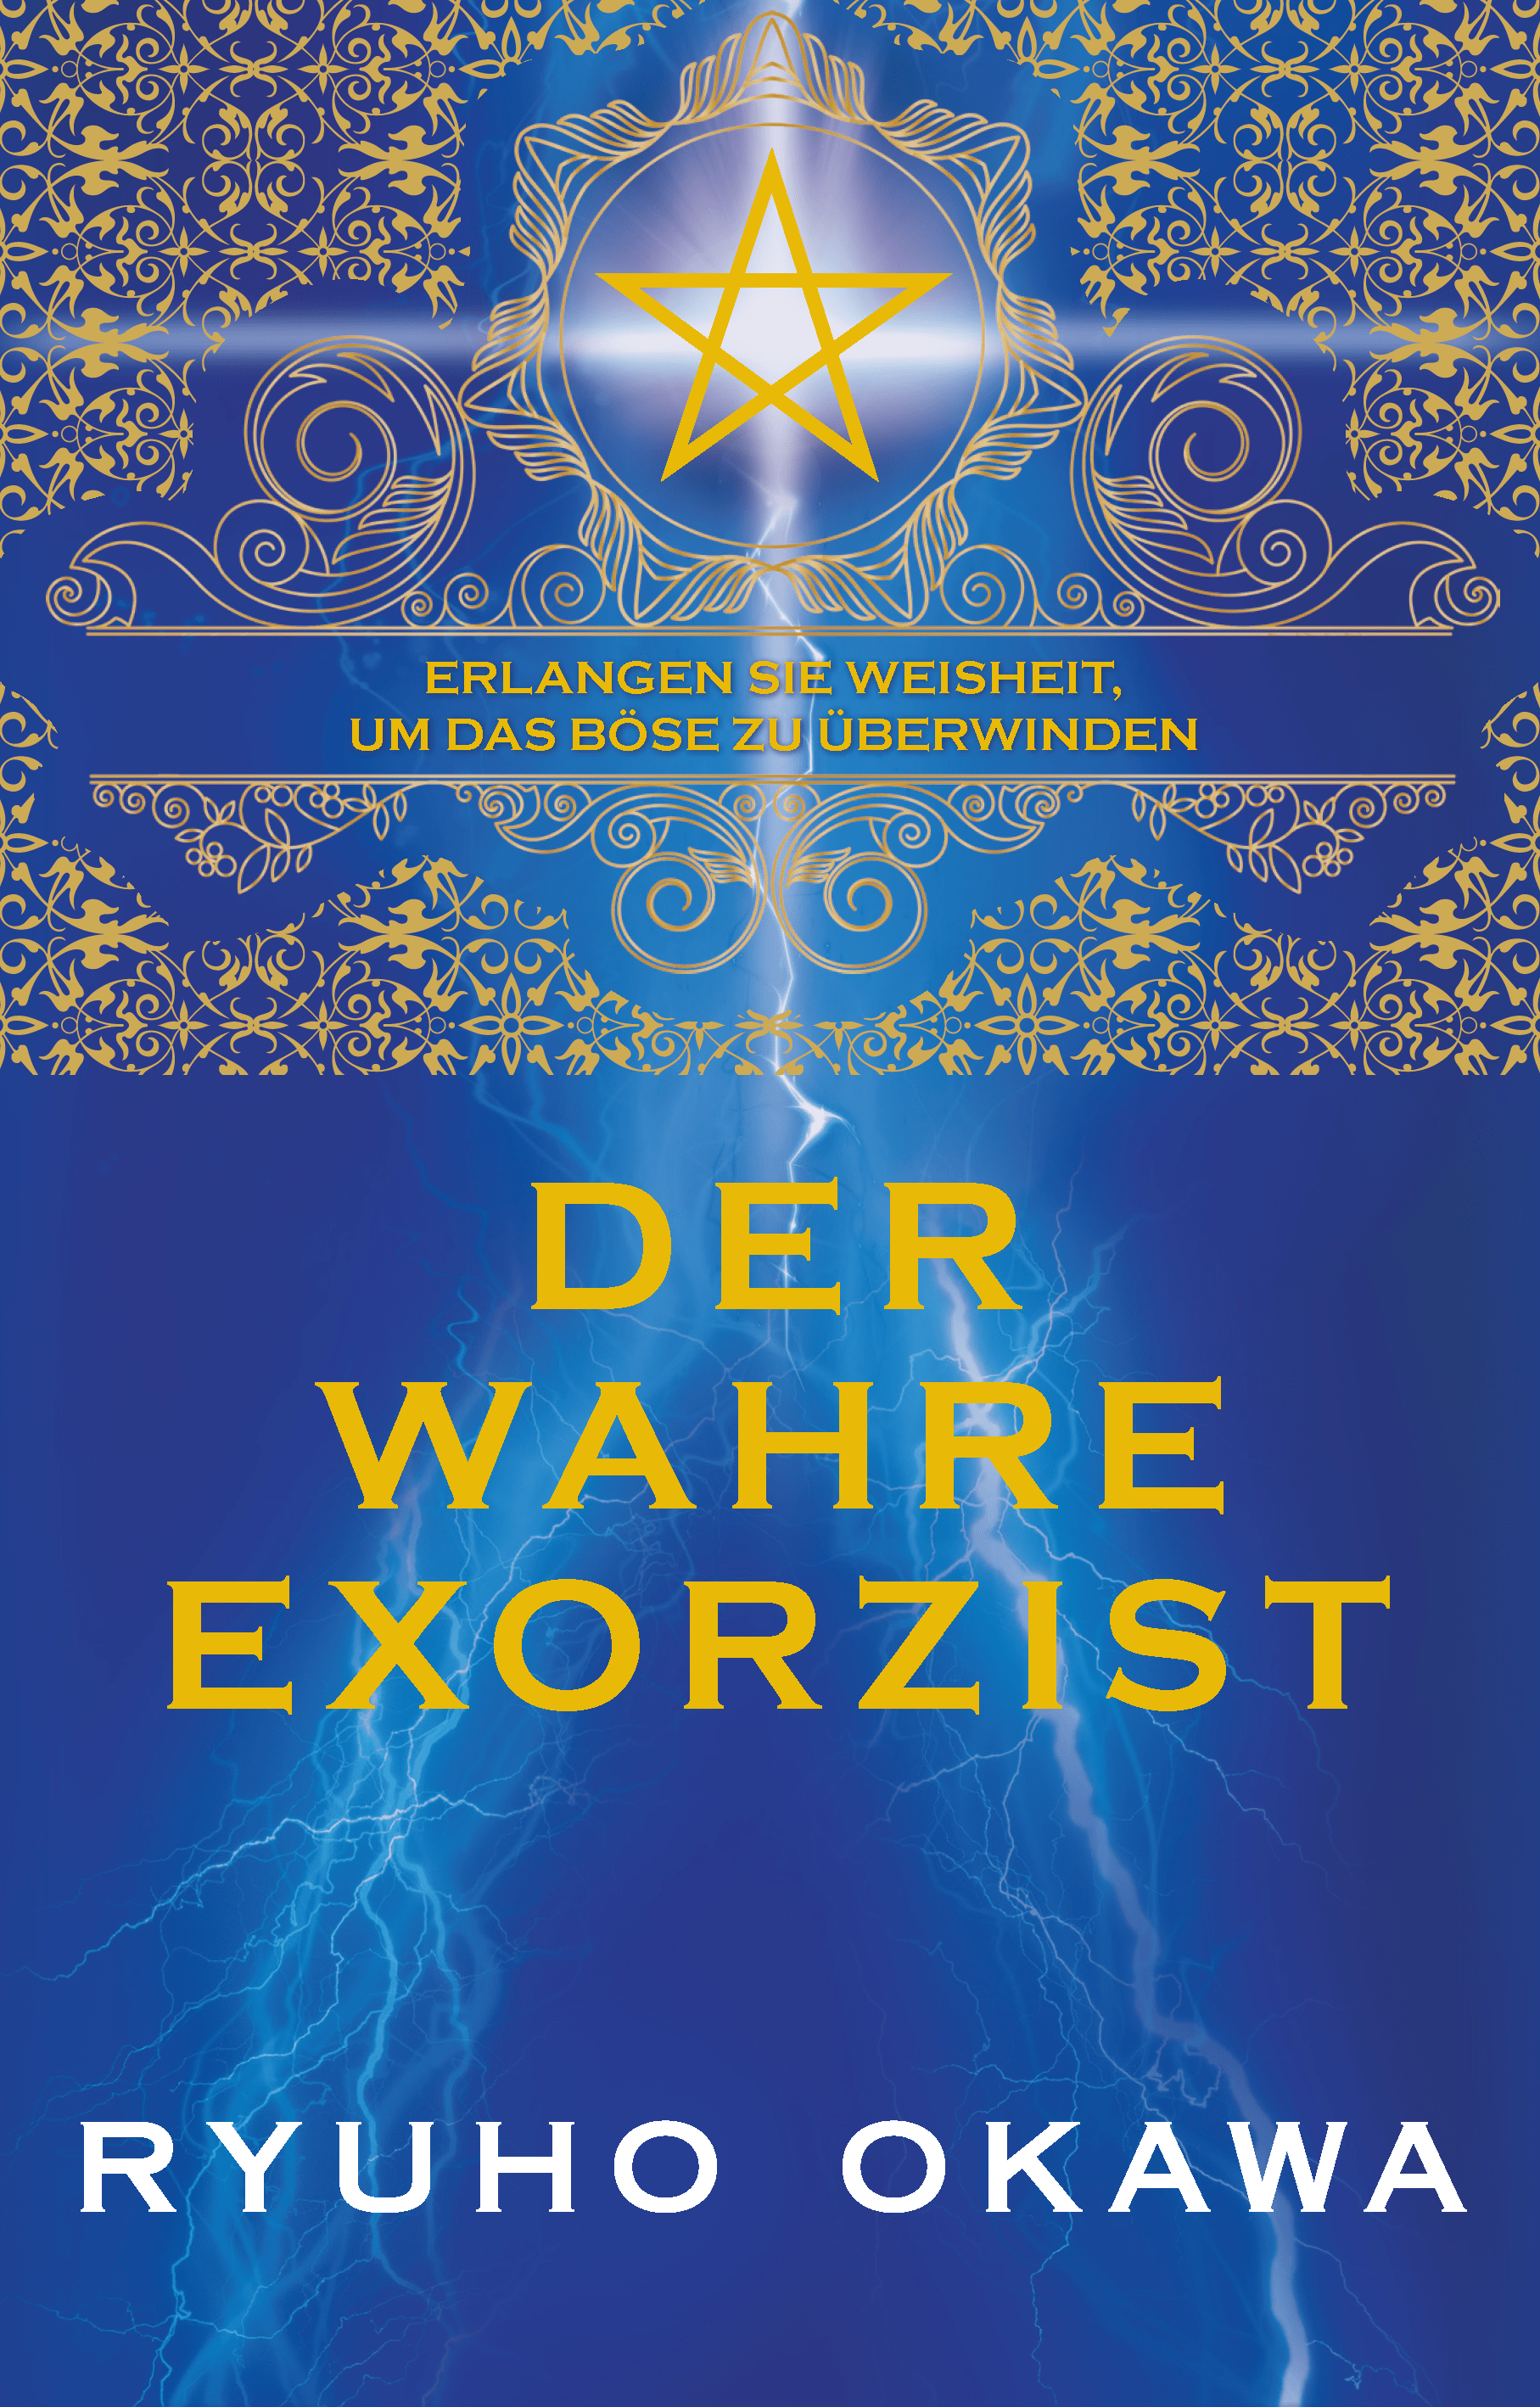 The Real Exorcist : Attain Wisdom to Conquer Evil, Ryuho Okawa, German - IRH Press International